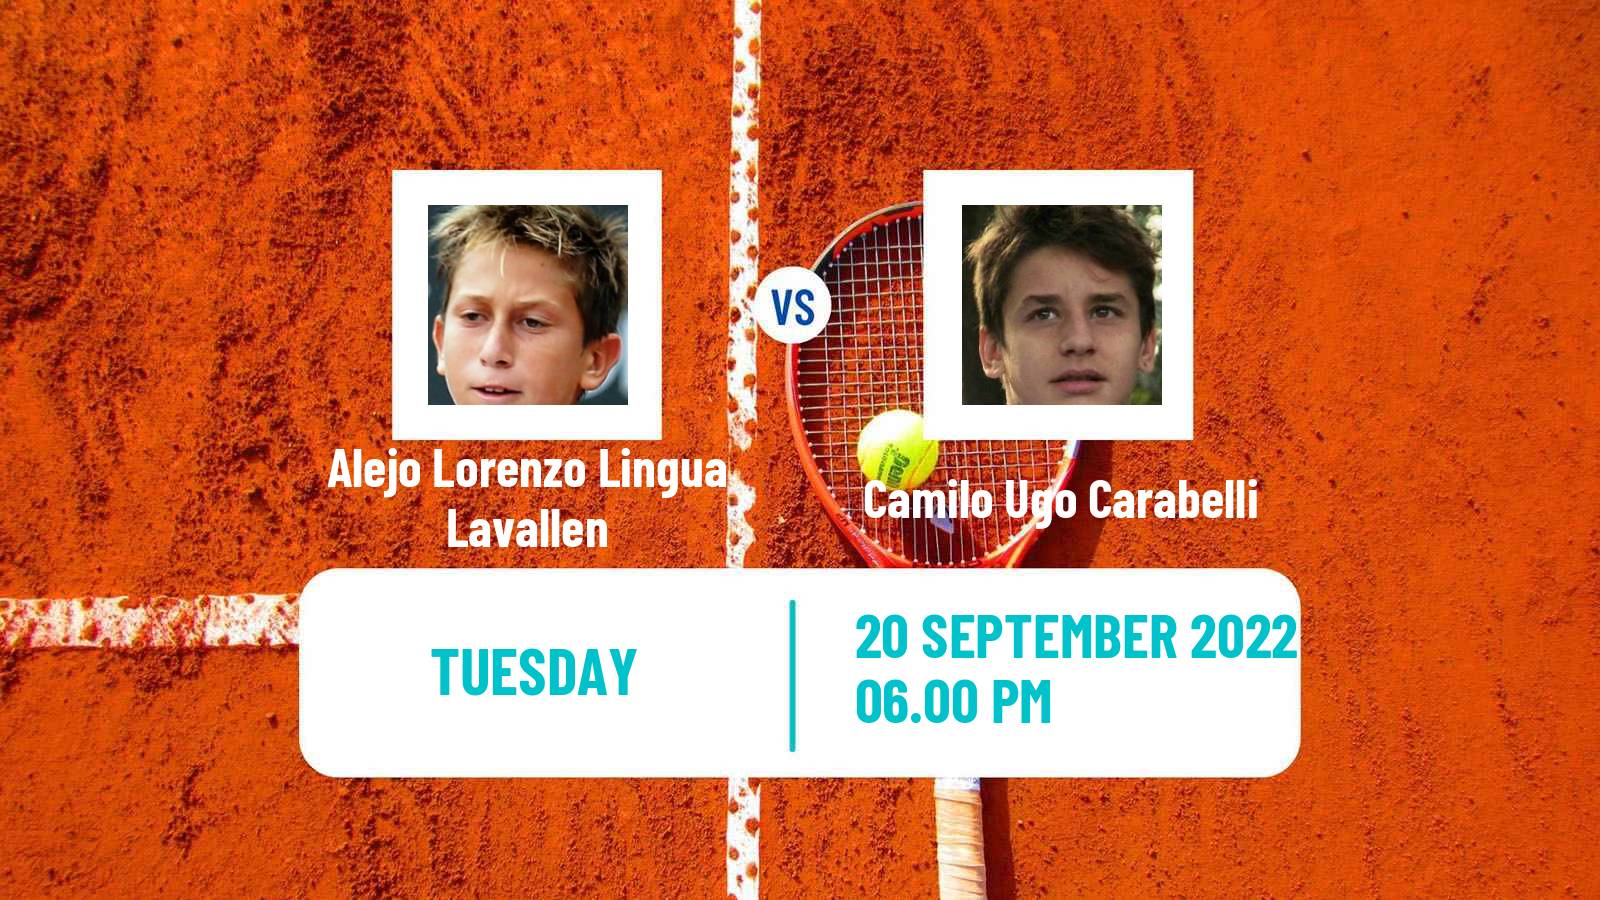 Tennis ATP Challenger Alejo Lorenzo Lingua Lavallen - Camilo Ugo Carabelli